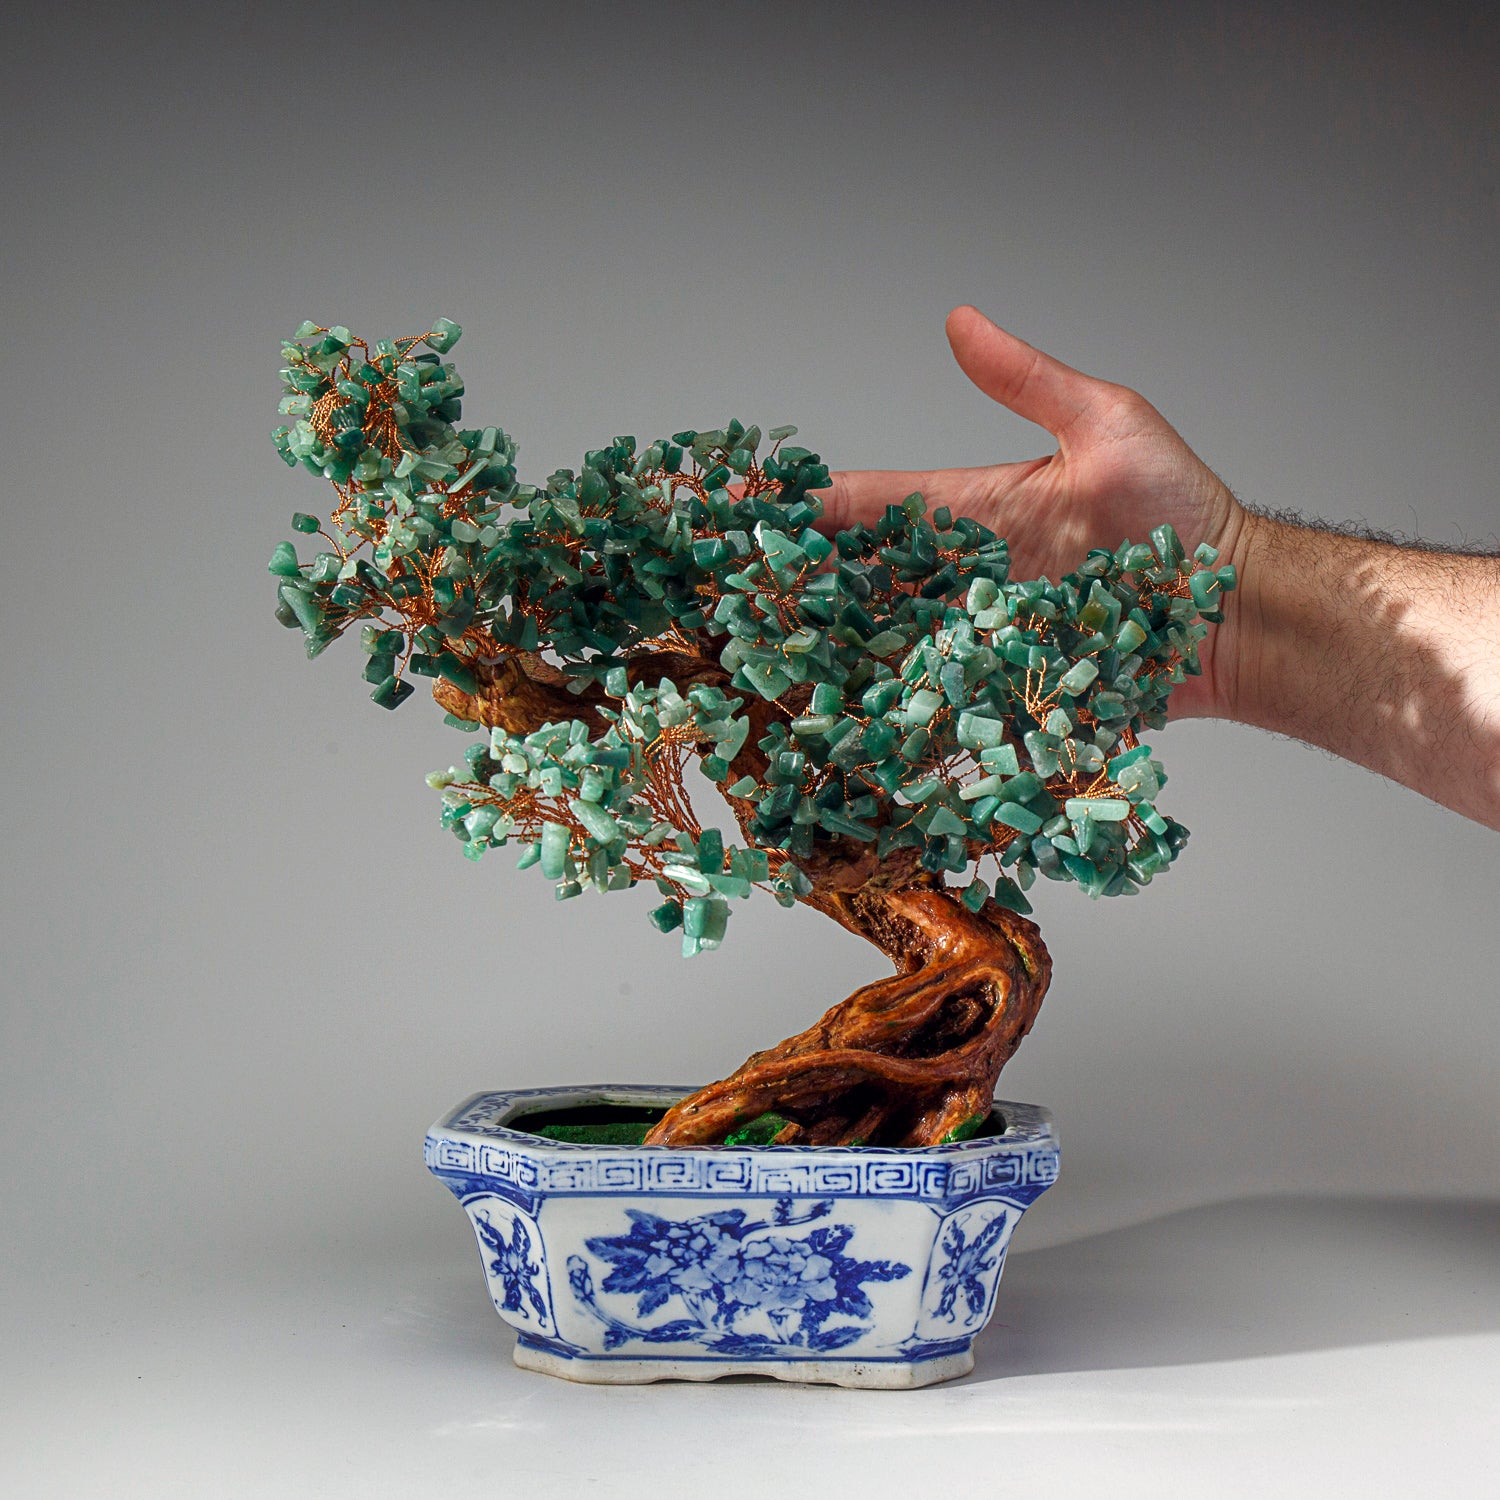 Genuine Green Aventurine Gemstone Bonsai Tree in Square Ceramic Pot (10.5” Tall)